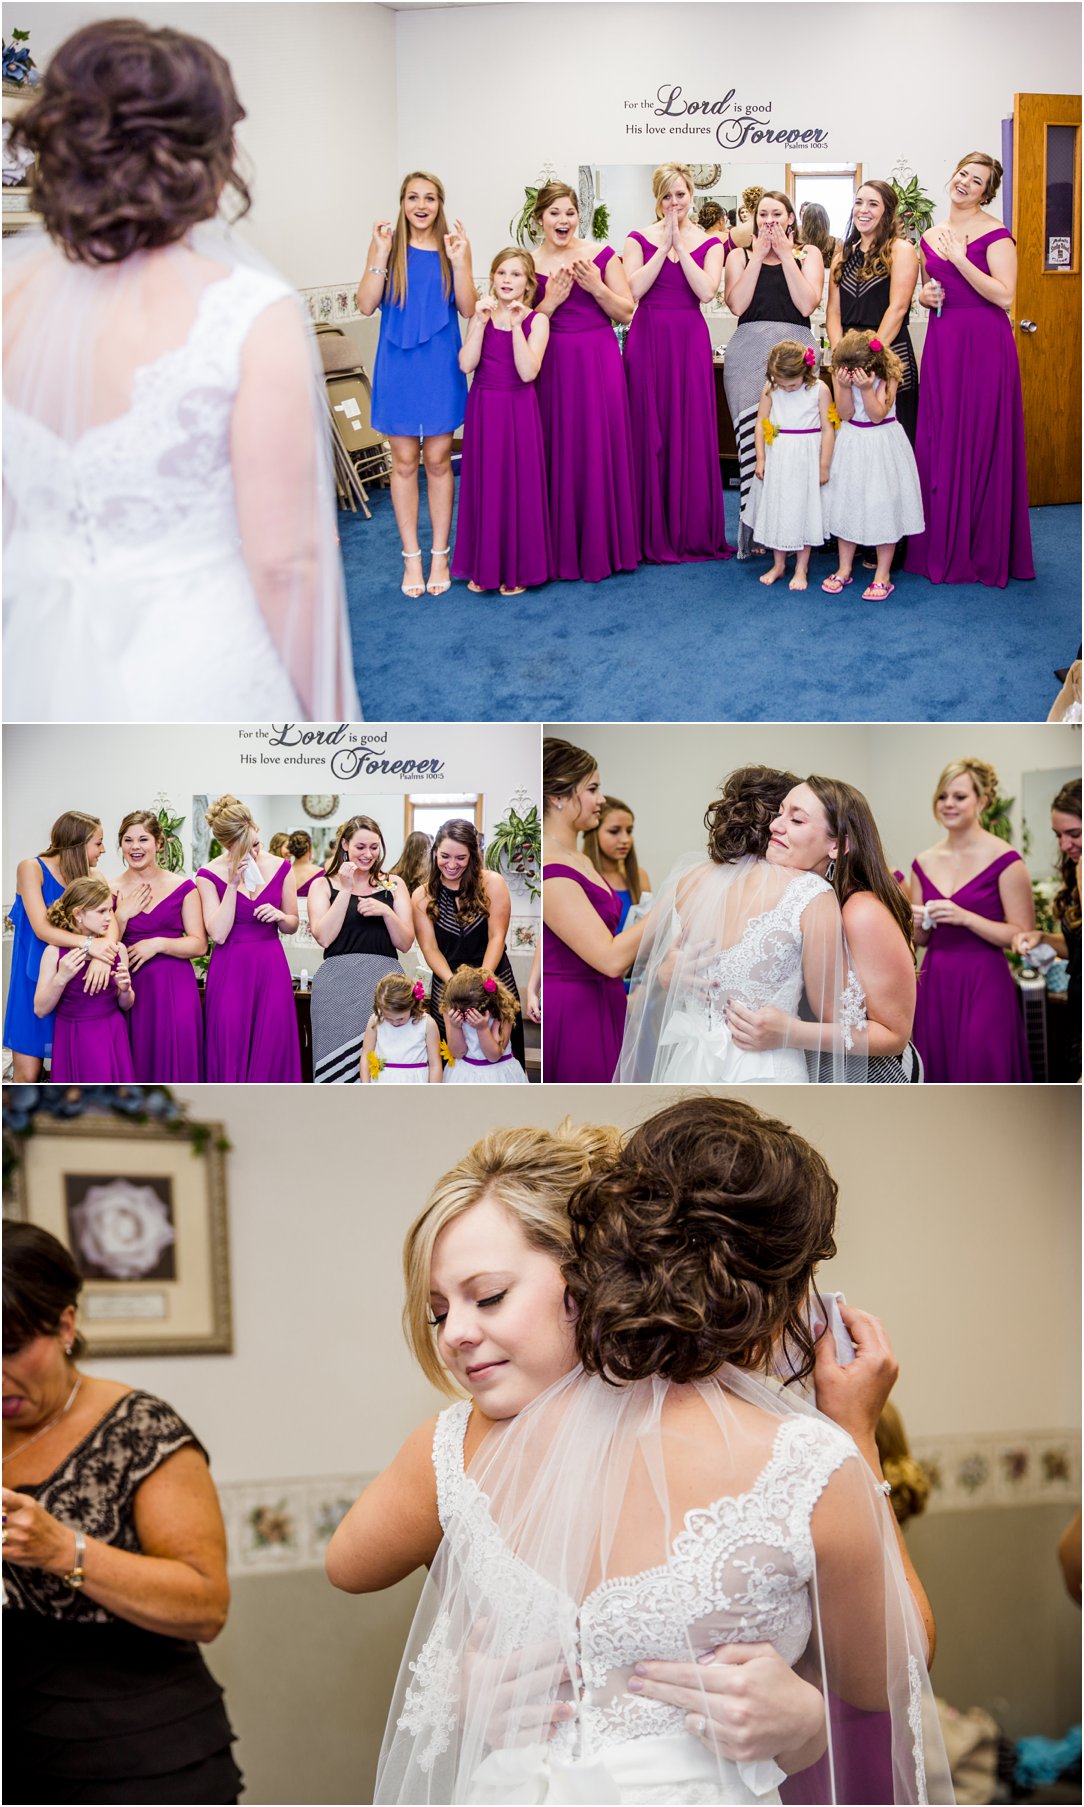 Married : Mr. and Mrs. Edgren | Central Nebraska Wedding by Greeley, Colorado Photographer